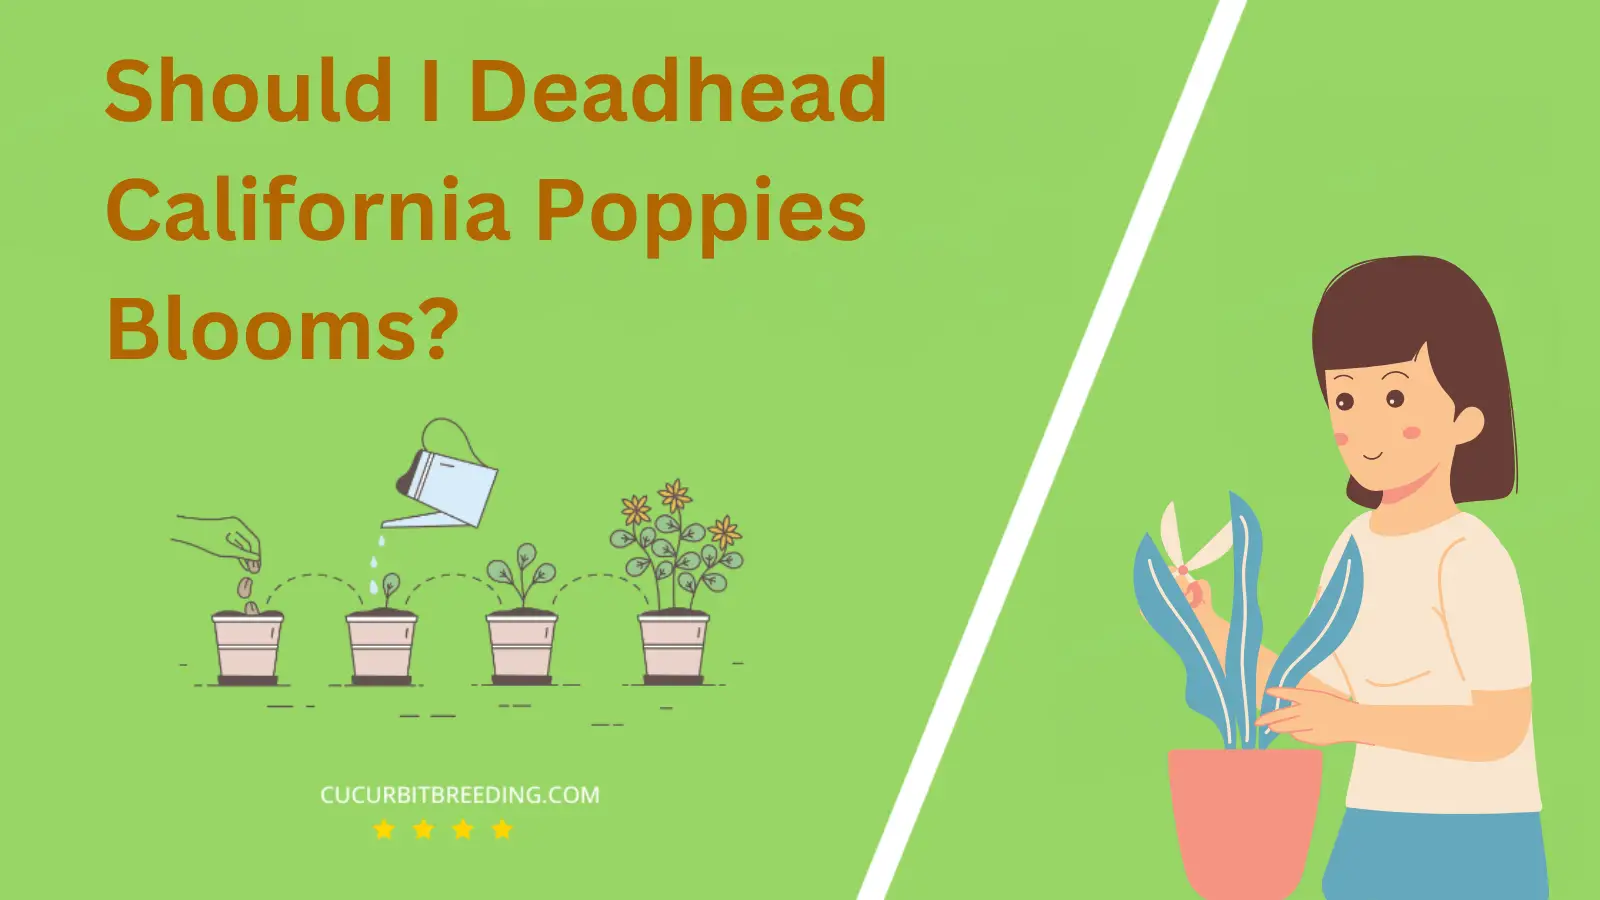 Should I Deadhead California Poppies Blooms?